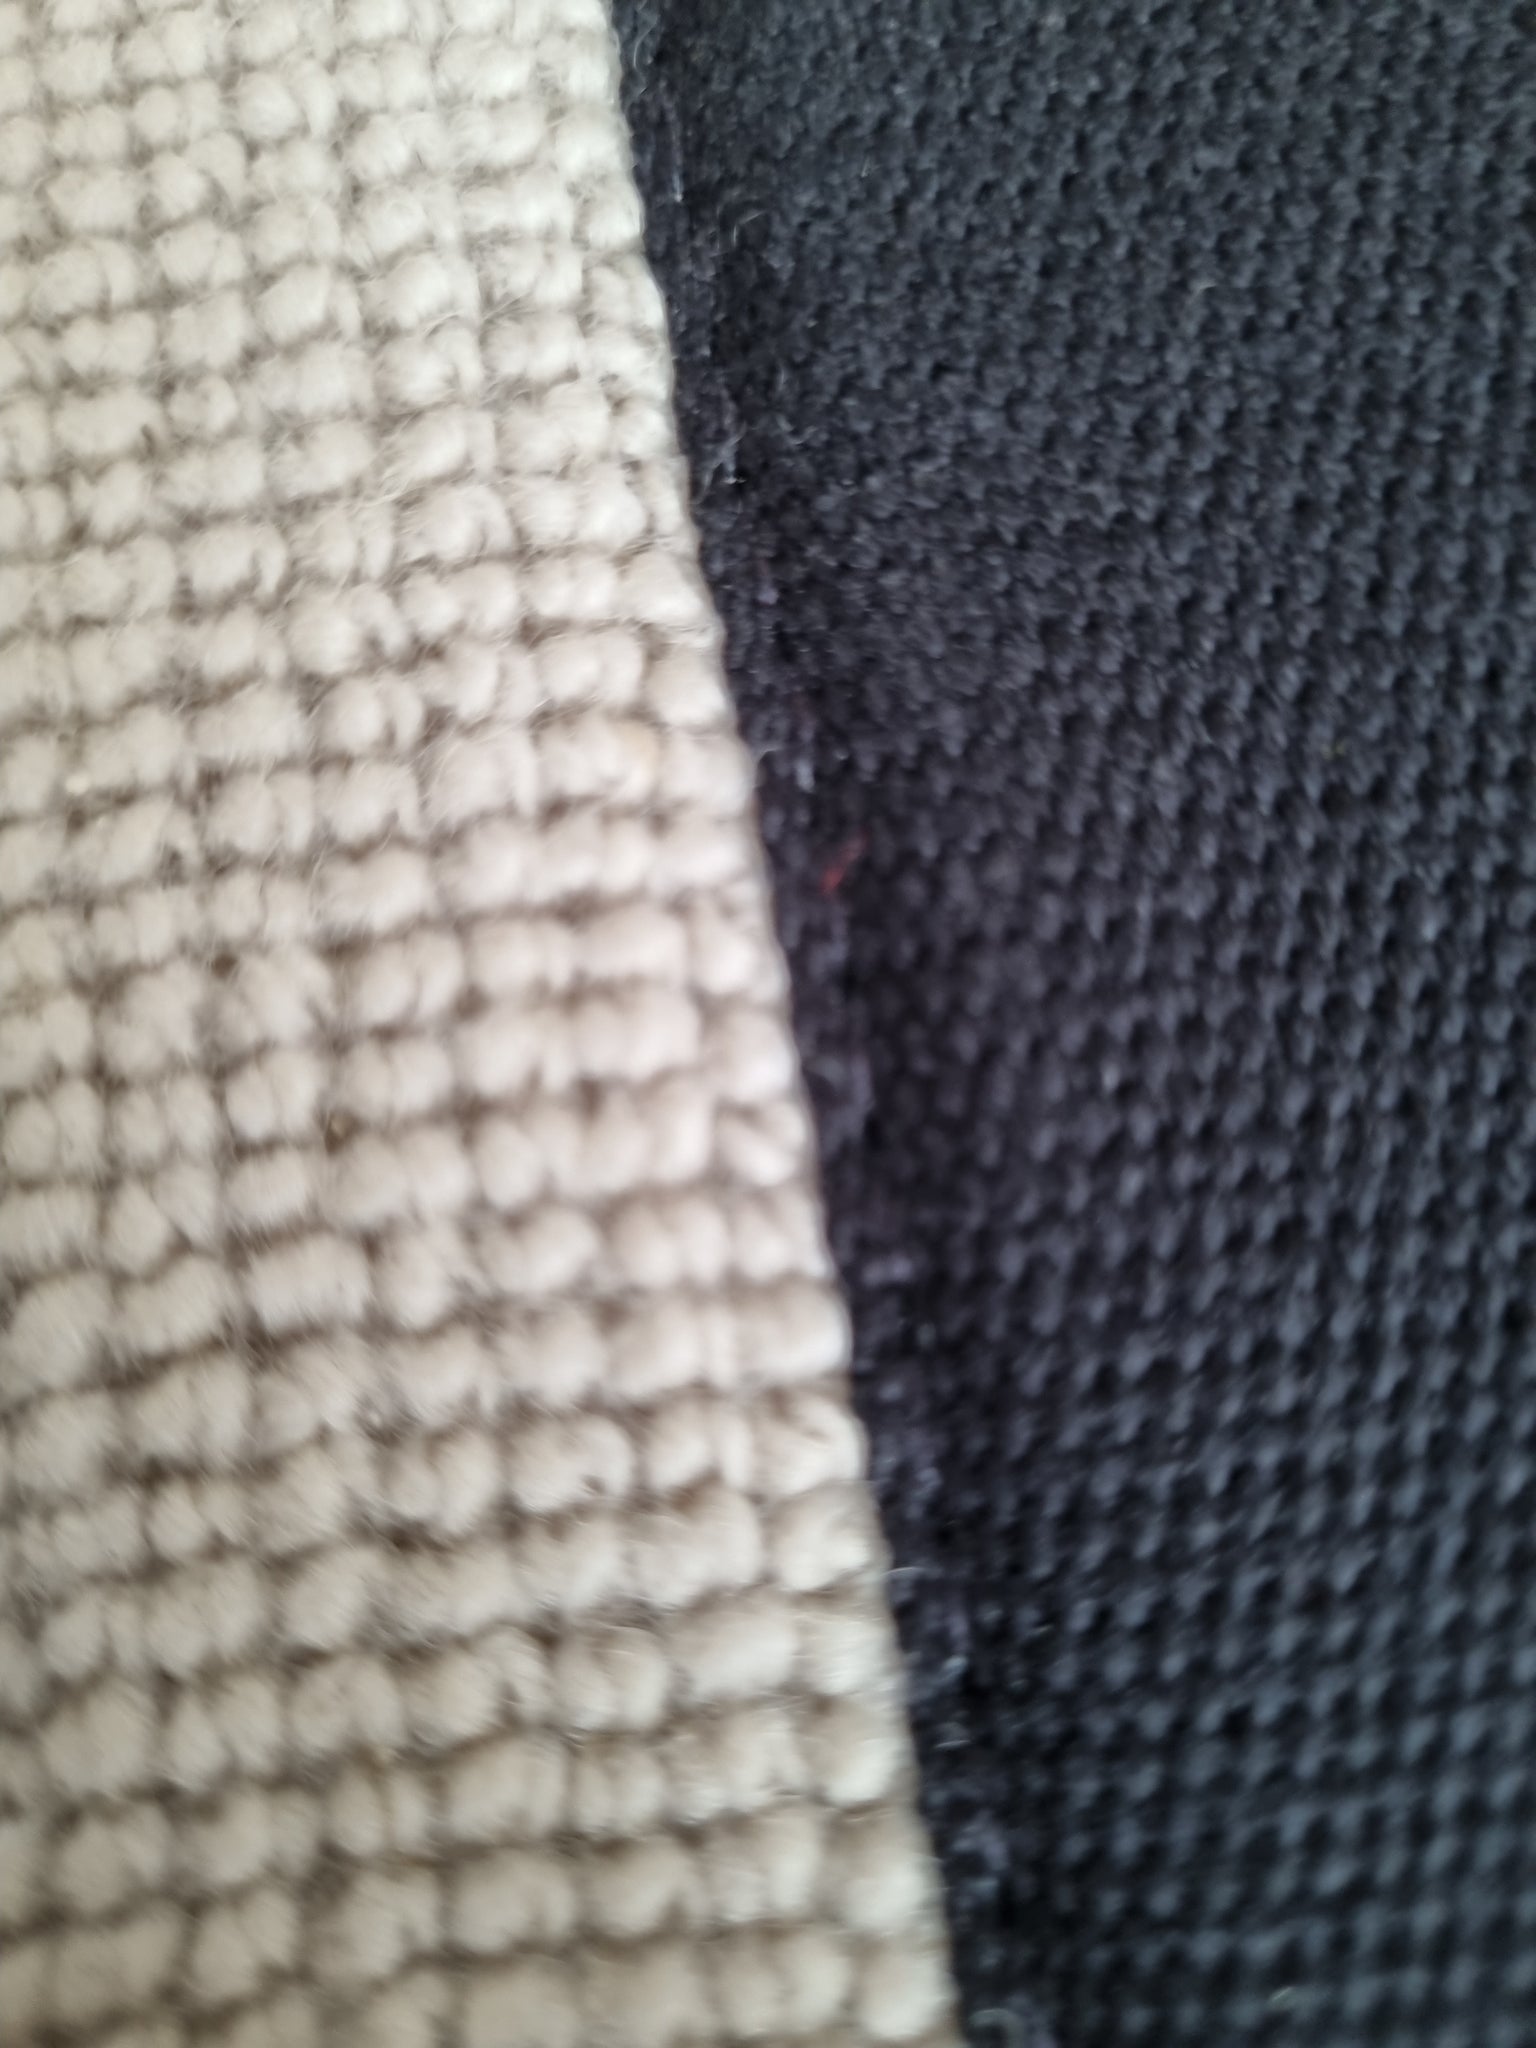 Cormar Pimlico Cement grey beige wool loop stair runner with black cotton border